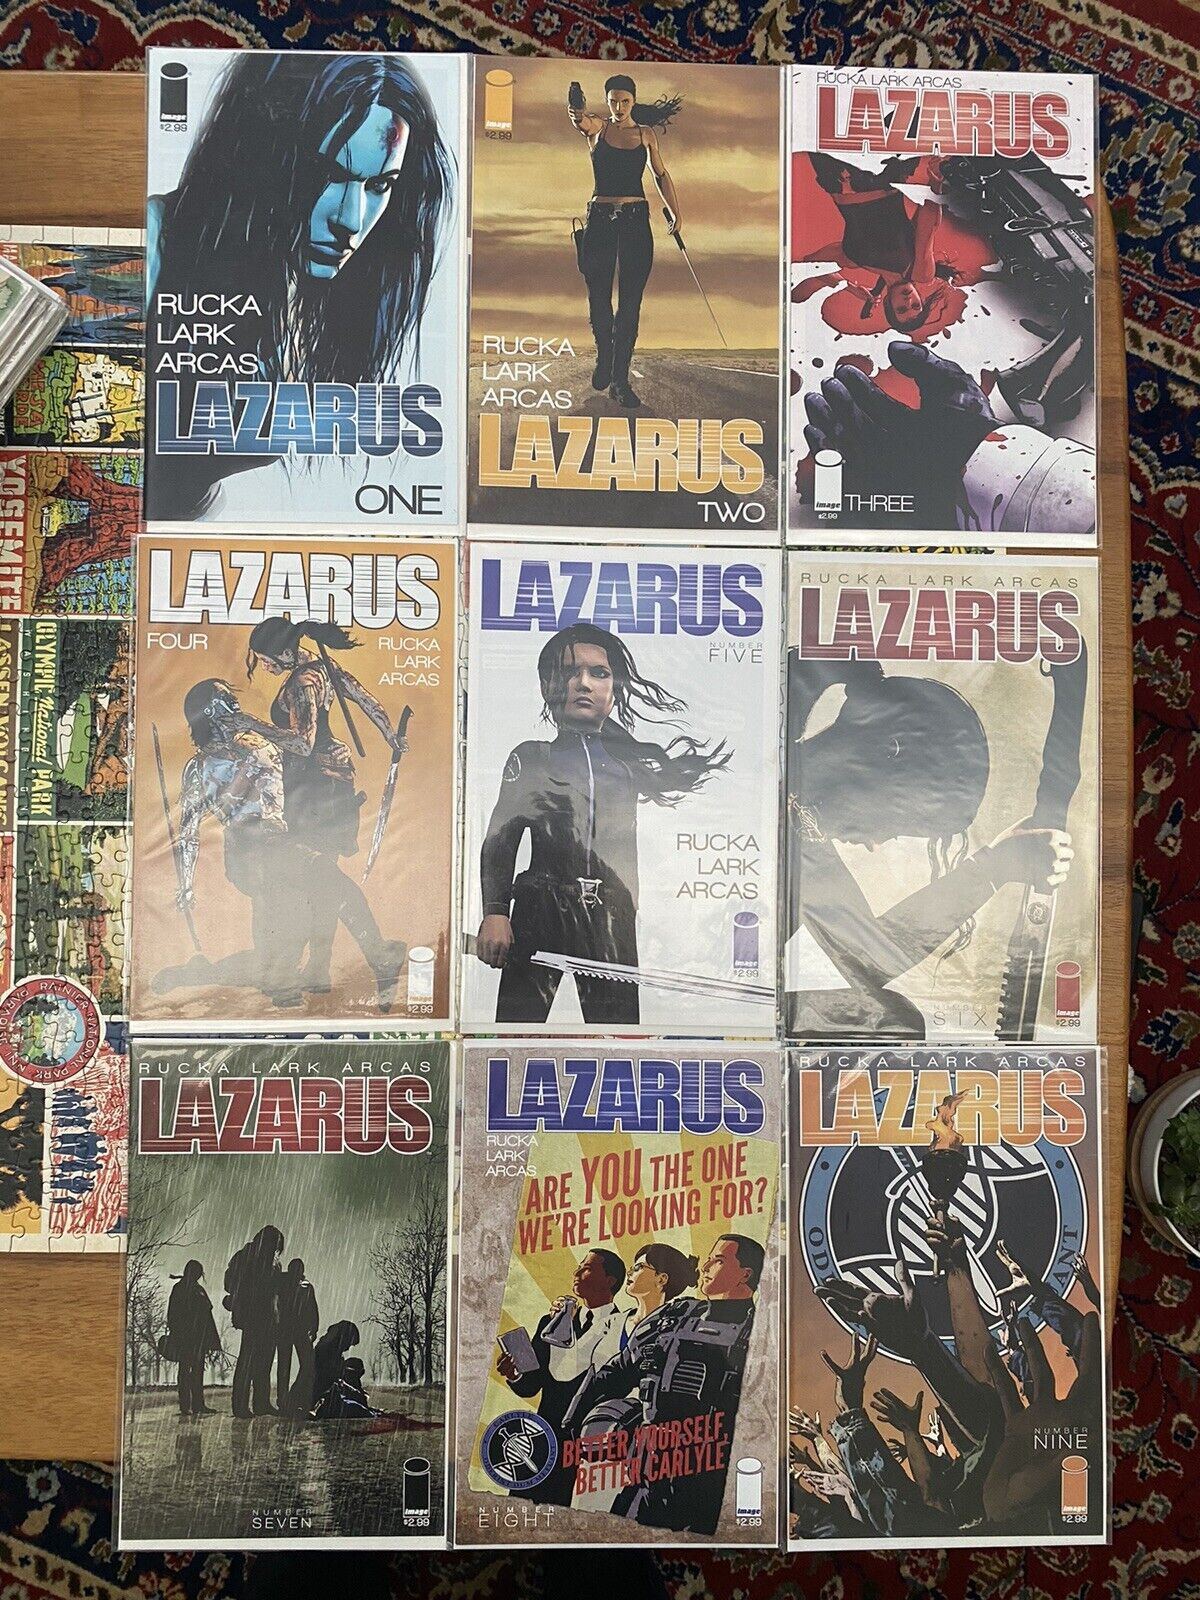 LAZARUS by Greg Rucka & Michael Lark 41 issue Run 2013-2022